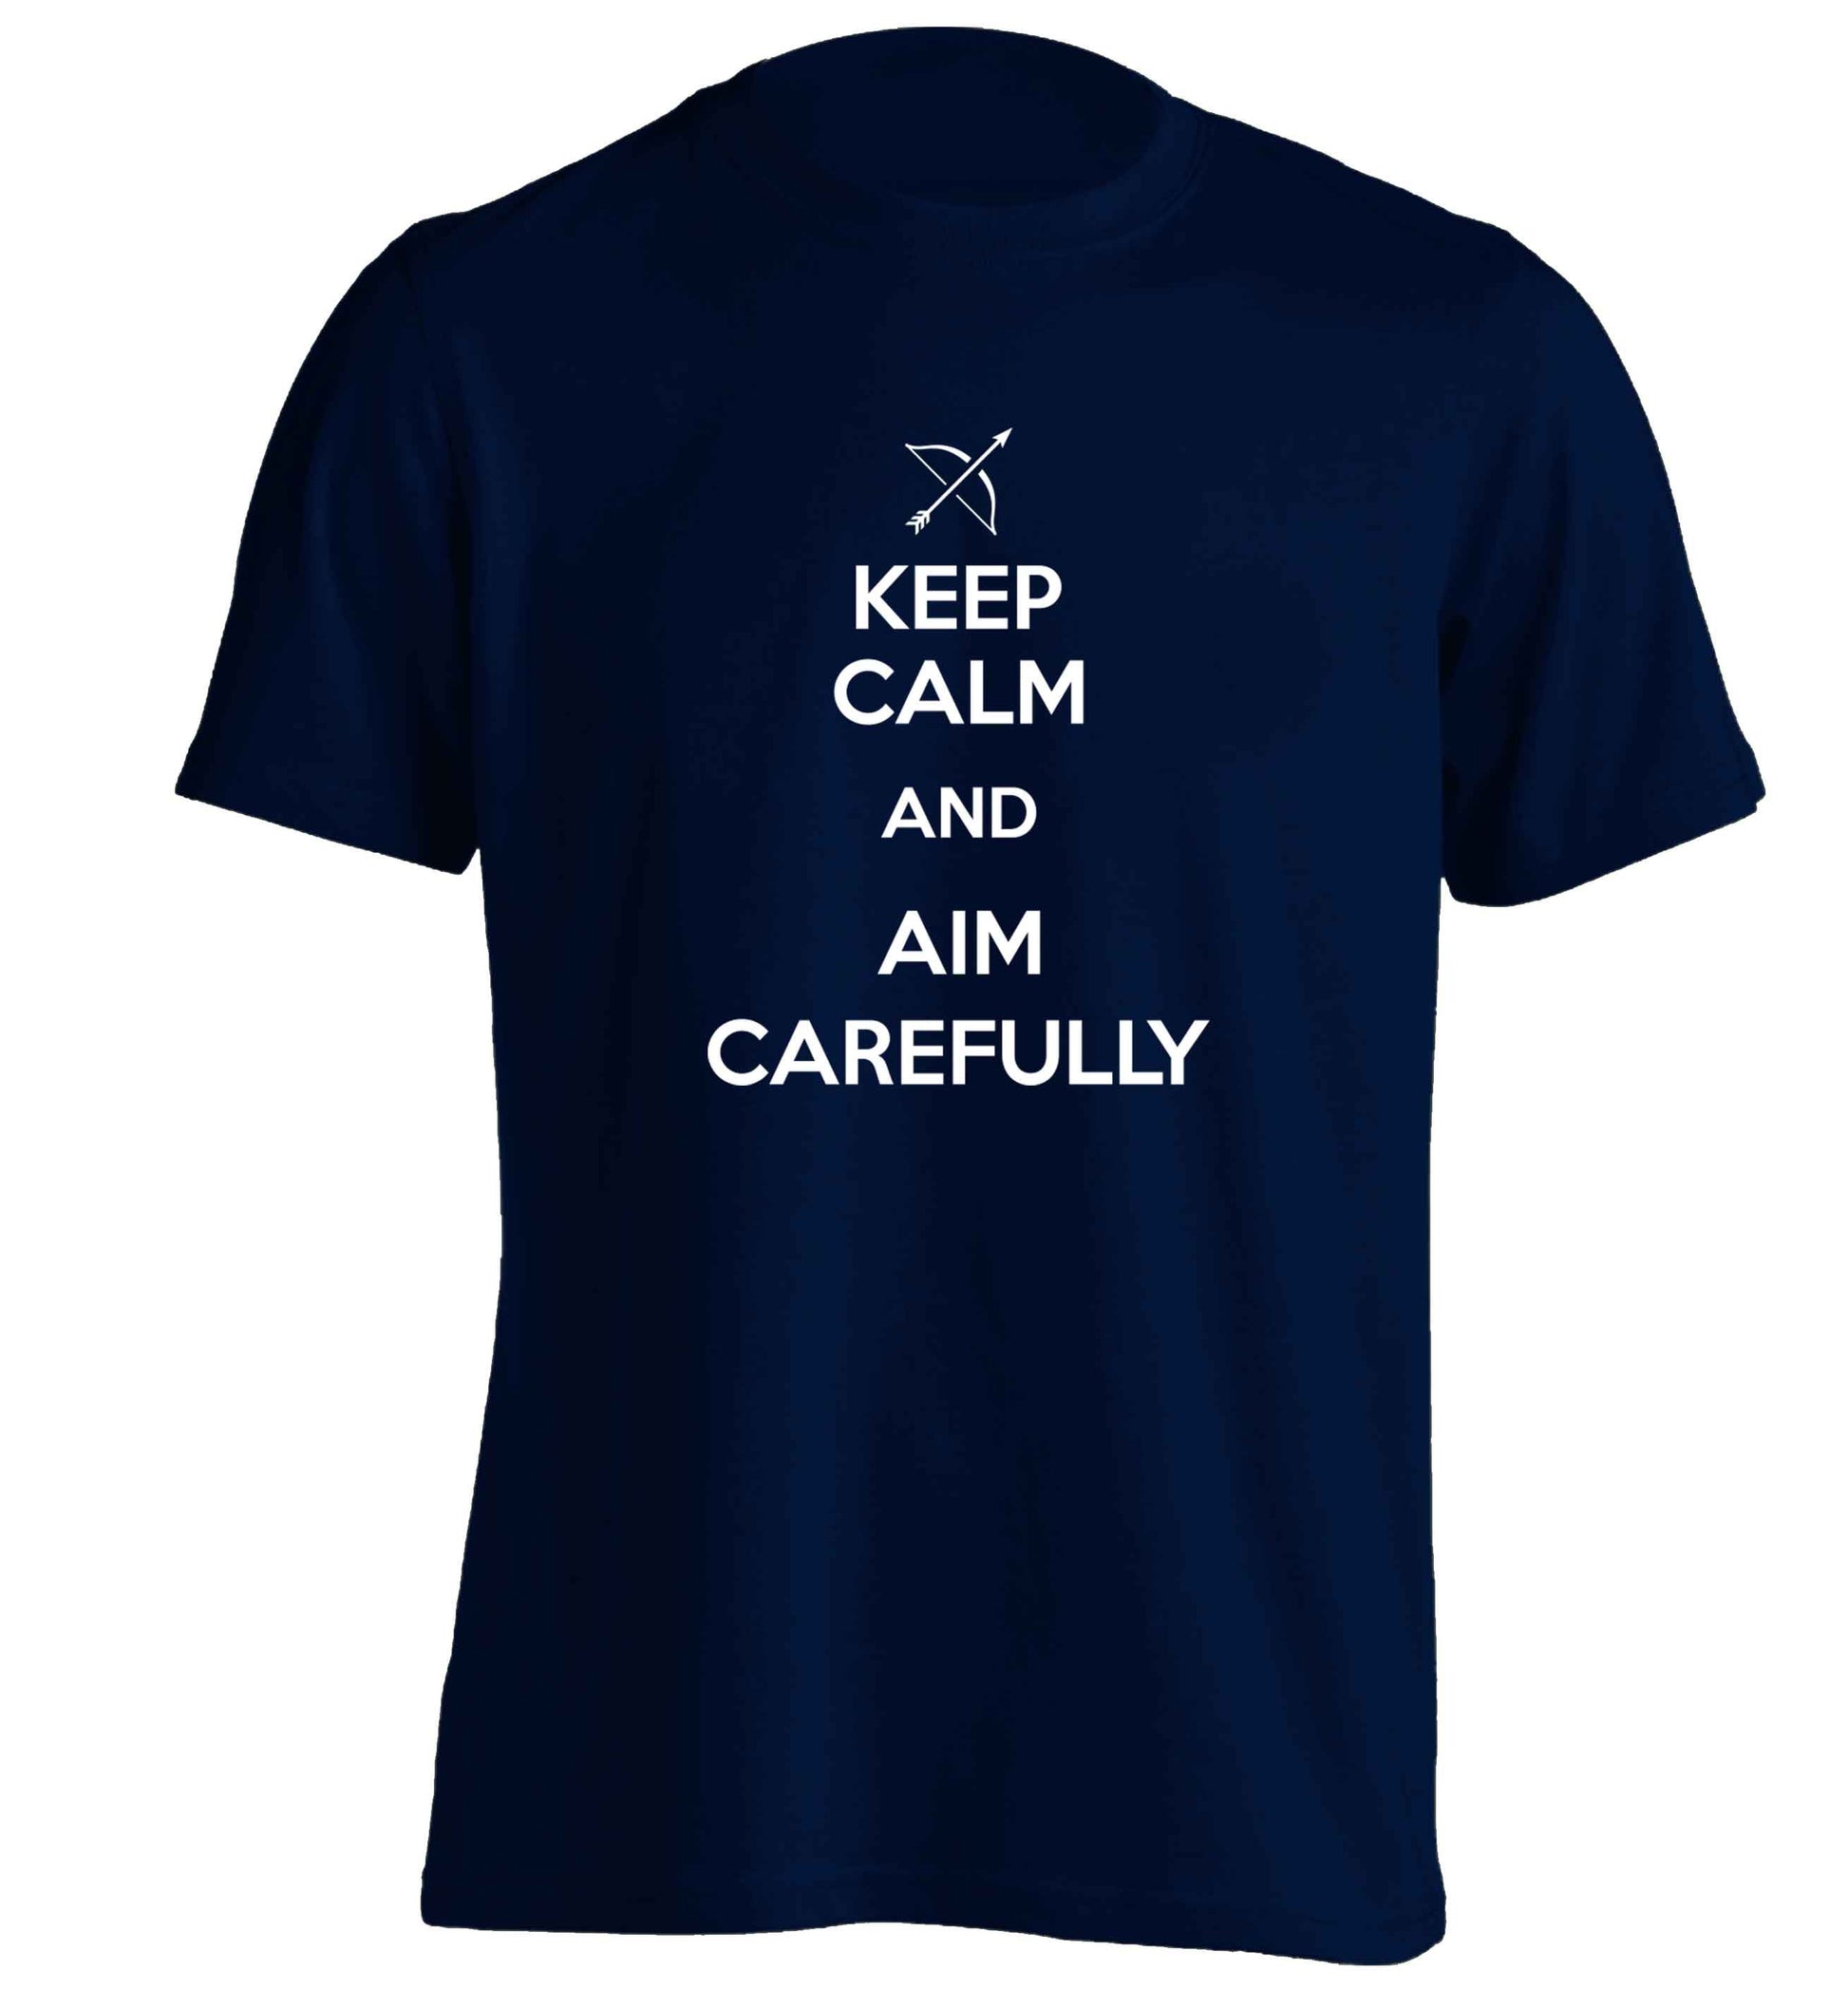 Keep calm and aim carefully adults unisex navy Tshirt 2XL